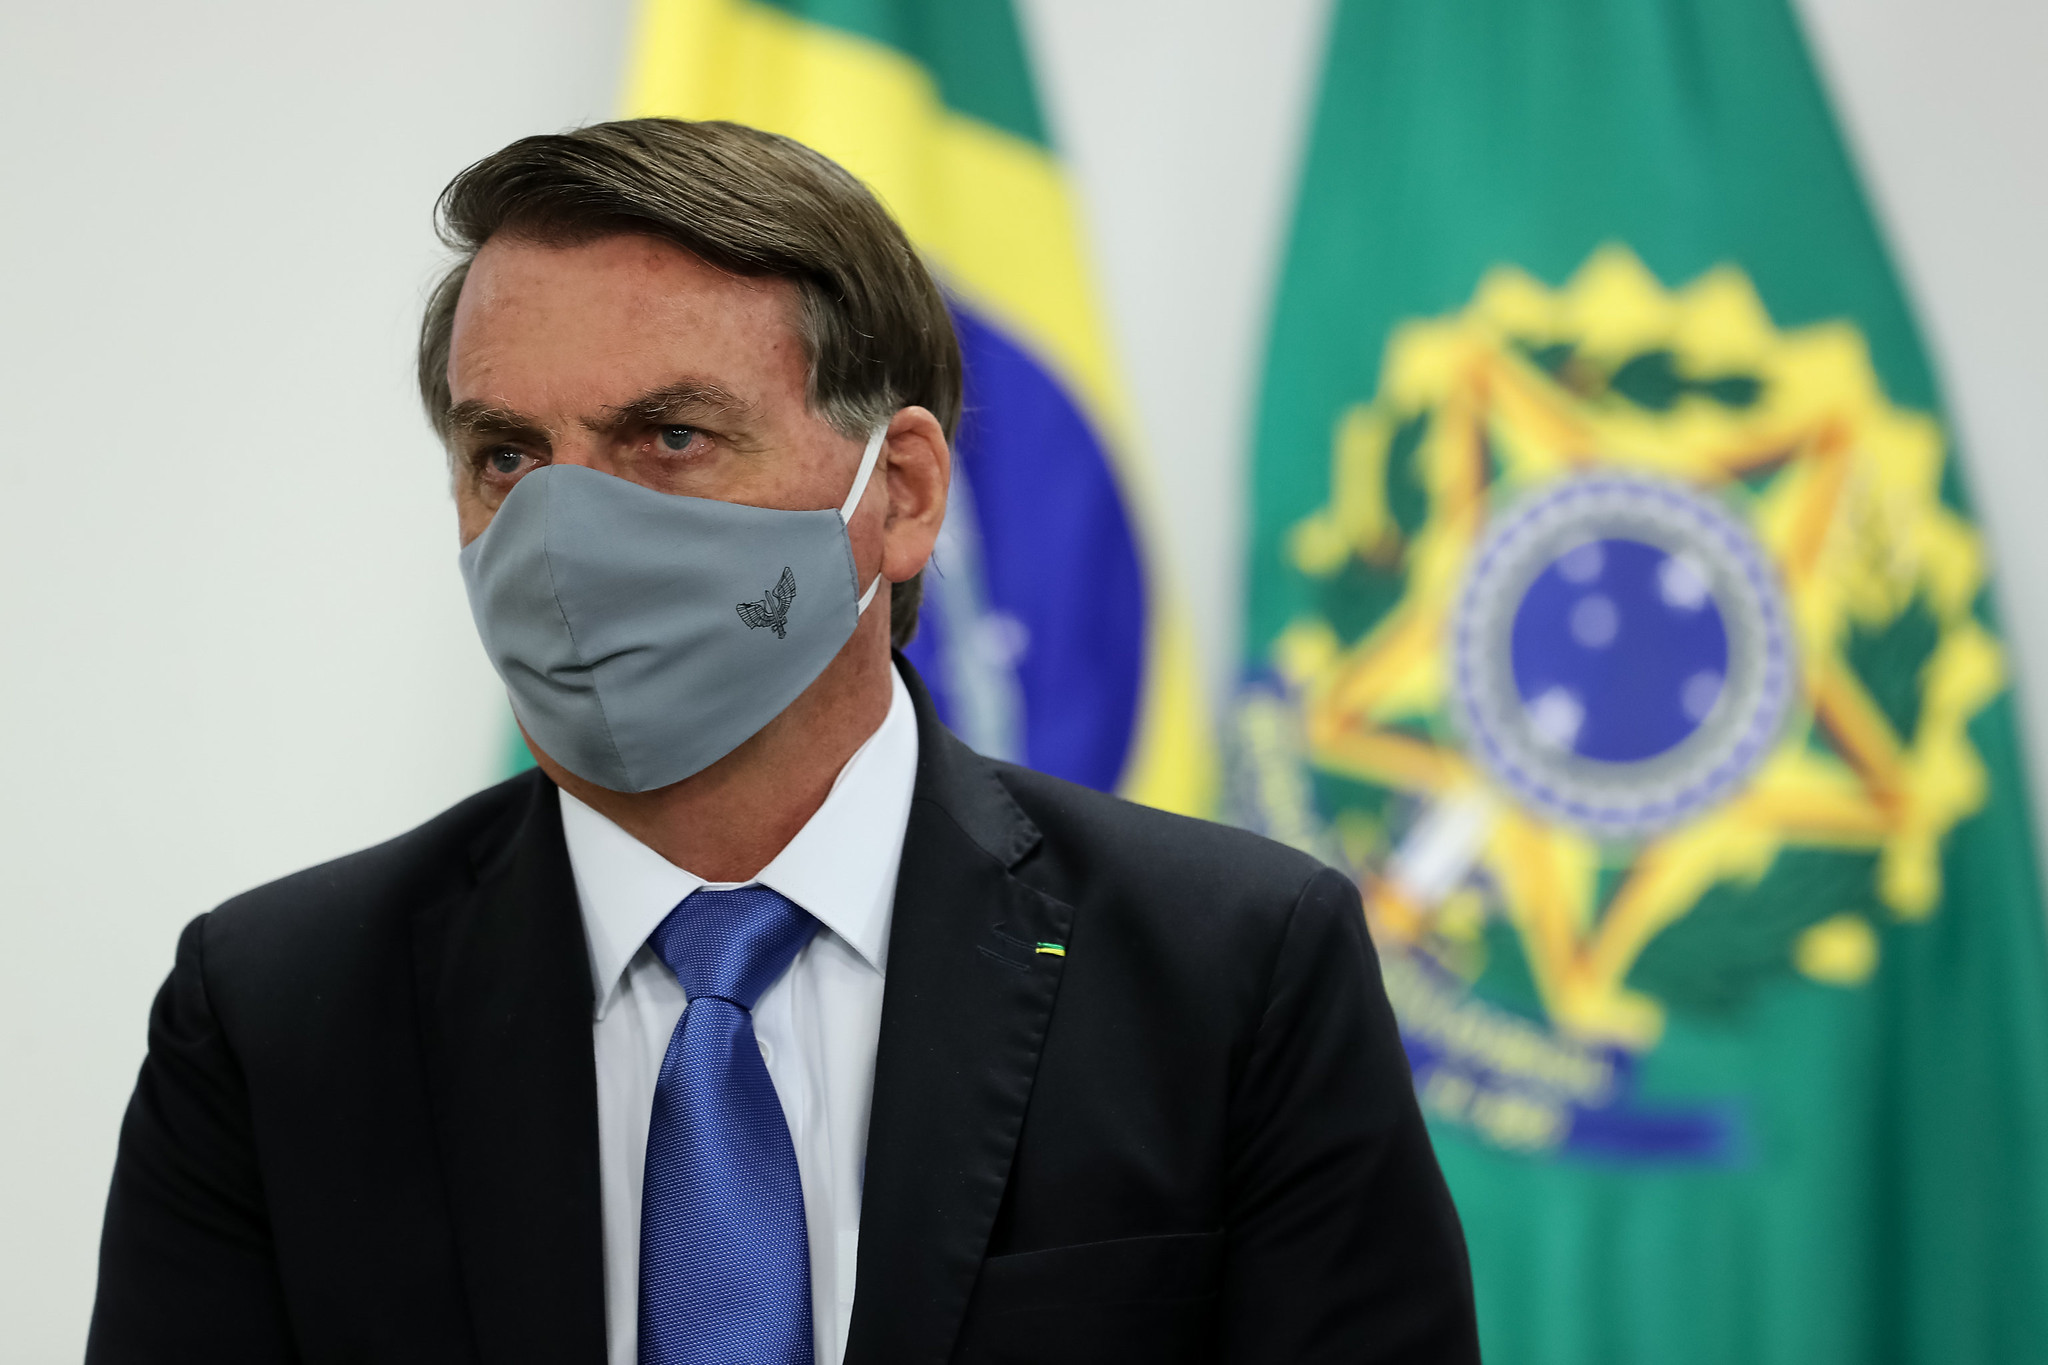 O presidente Jair Bolsonaro usa máscara durante cerimônia em Brasília